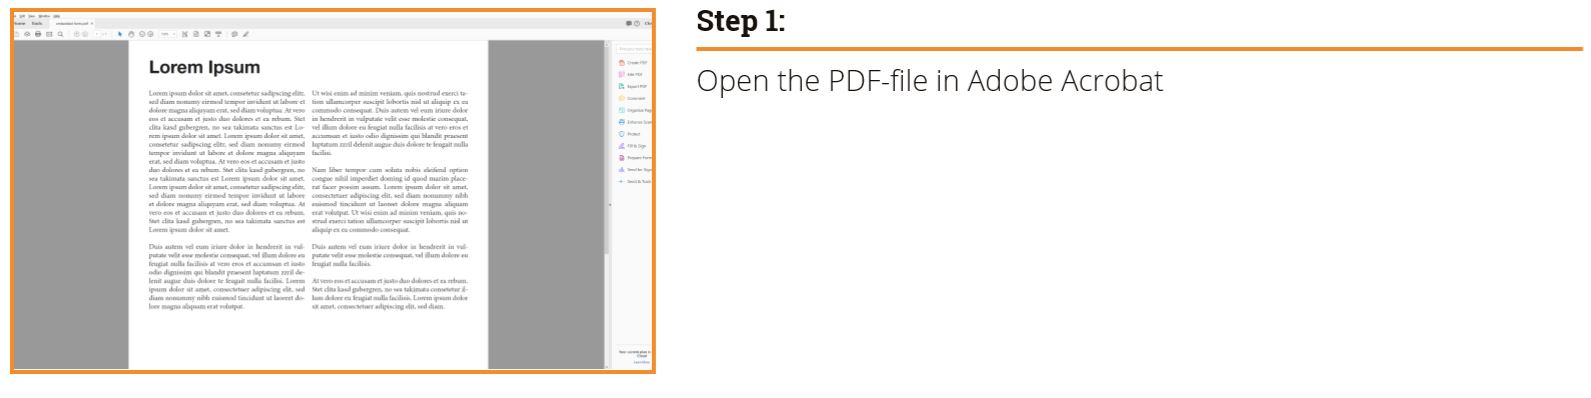 Open the PDF-file in Adobe Acrobat